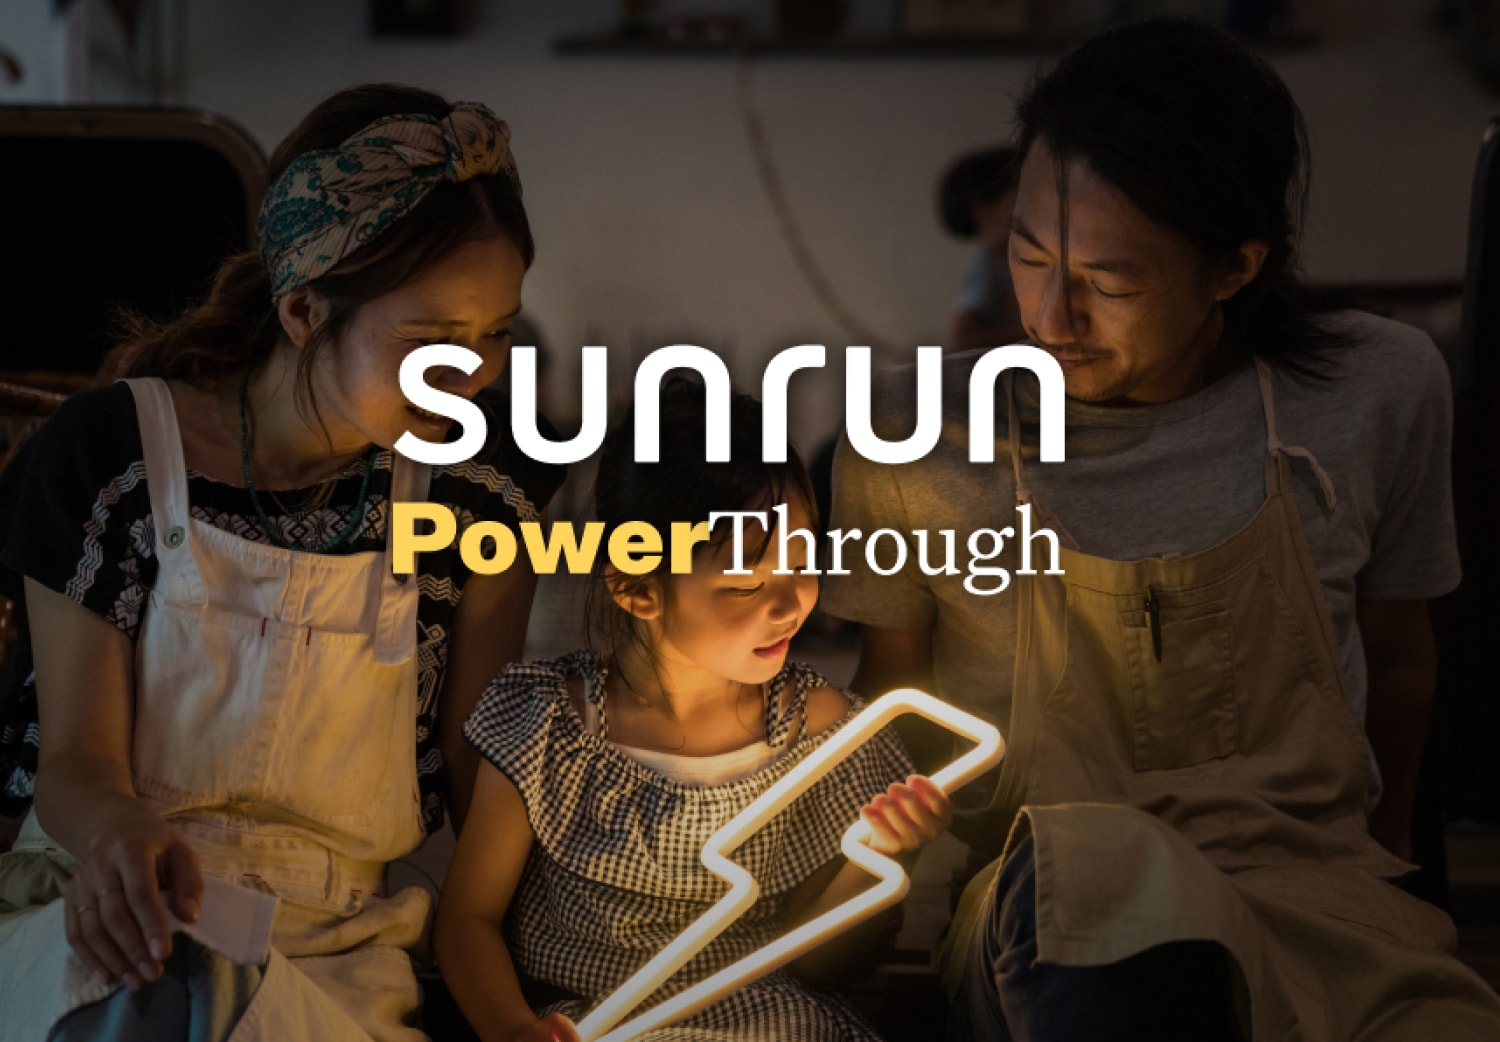 Sunrun Power Through